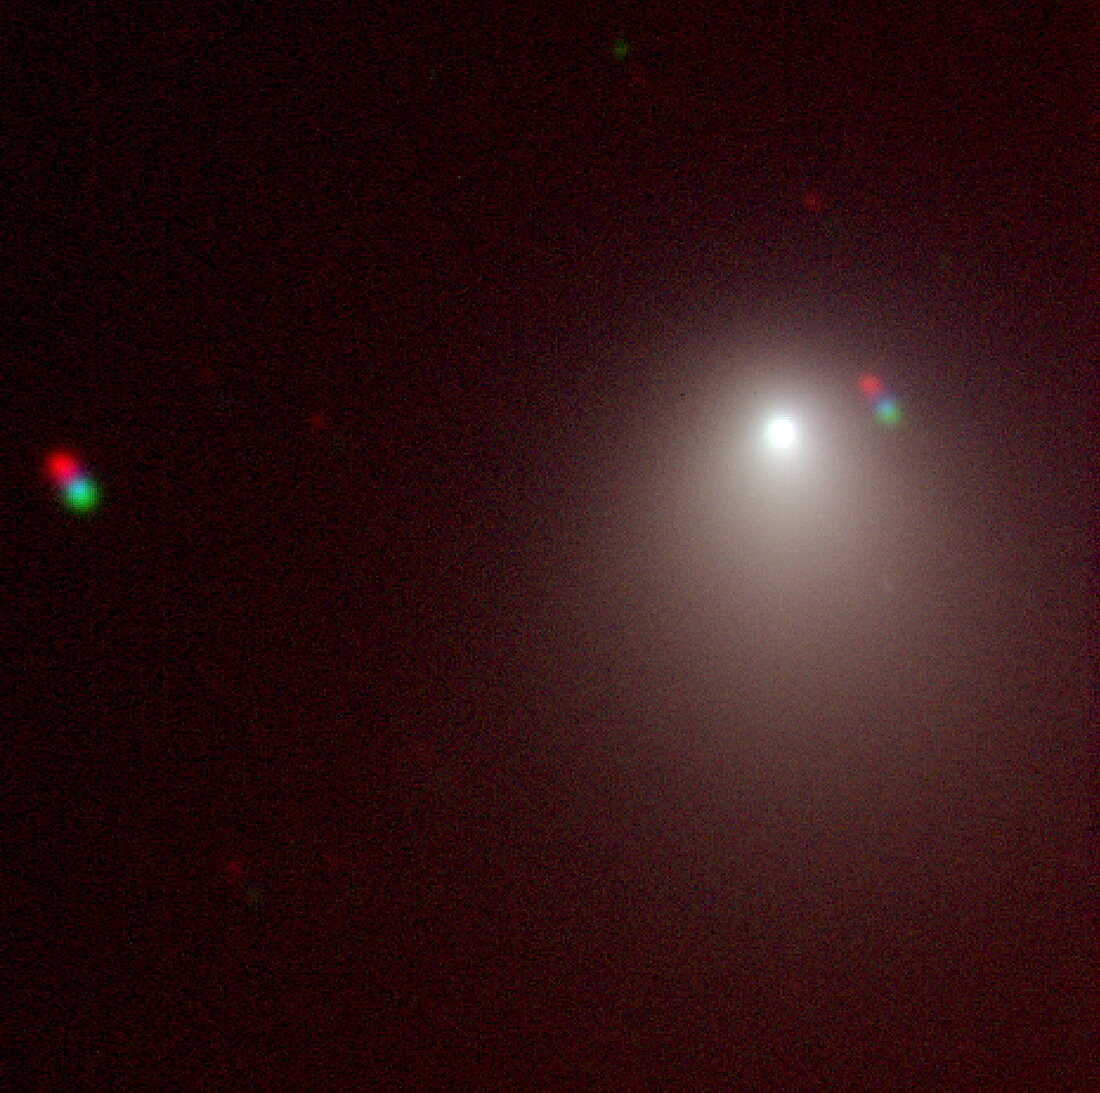 Comet Tempel 1,before Deep Impact strike